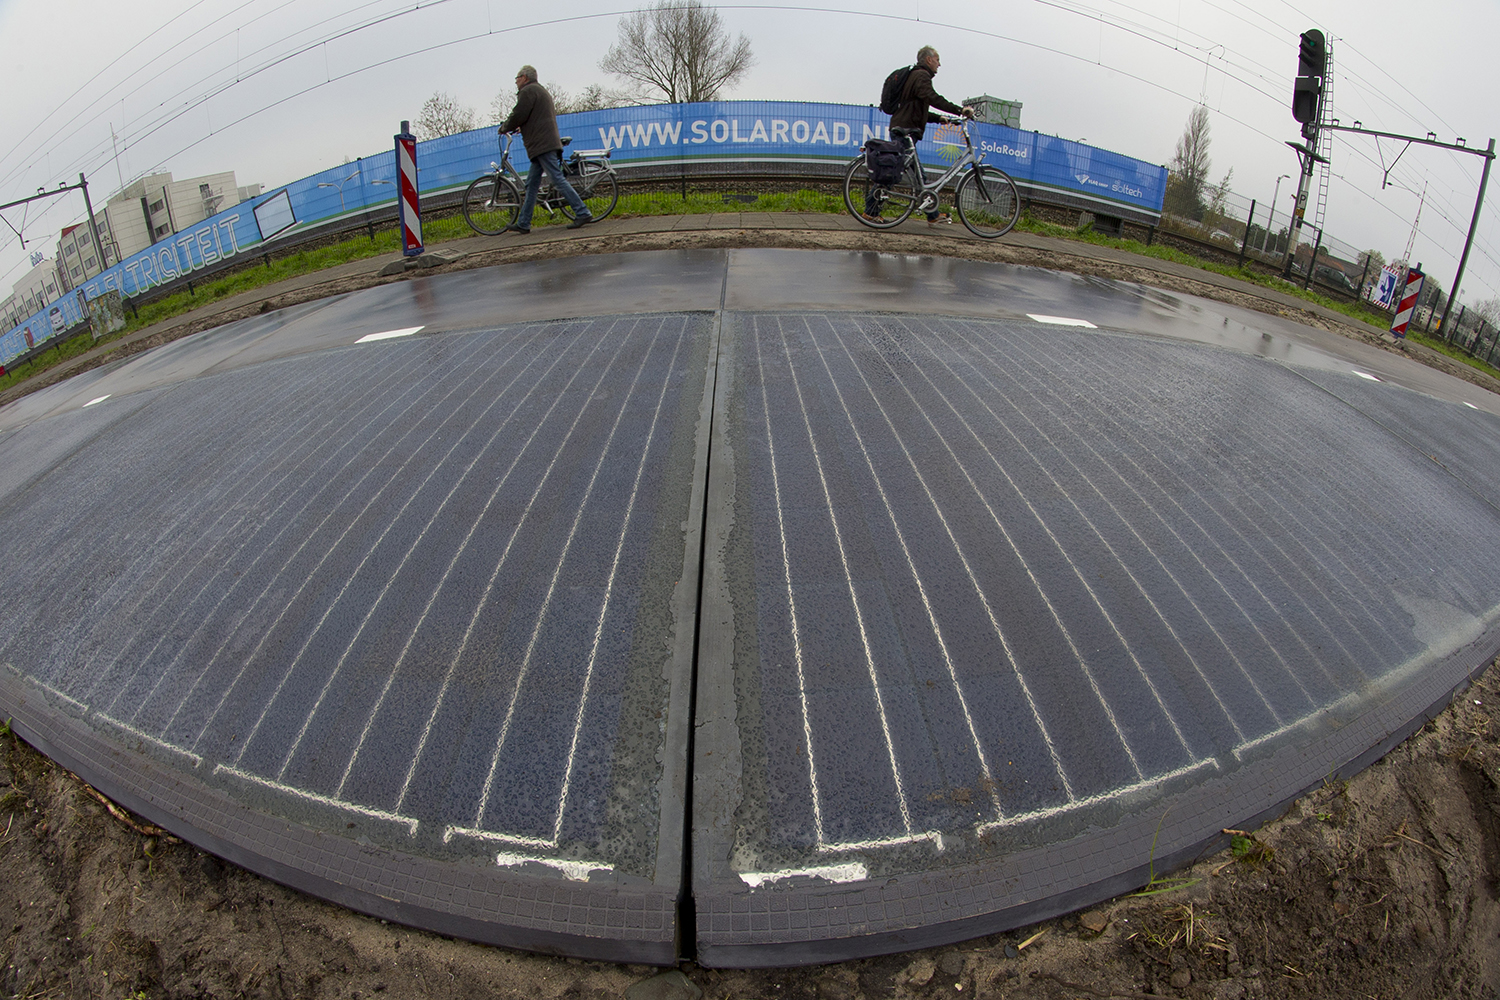 La primera calle solar ¡En Holanda!